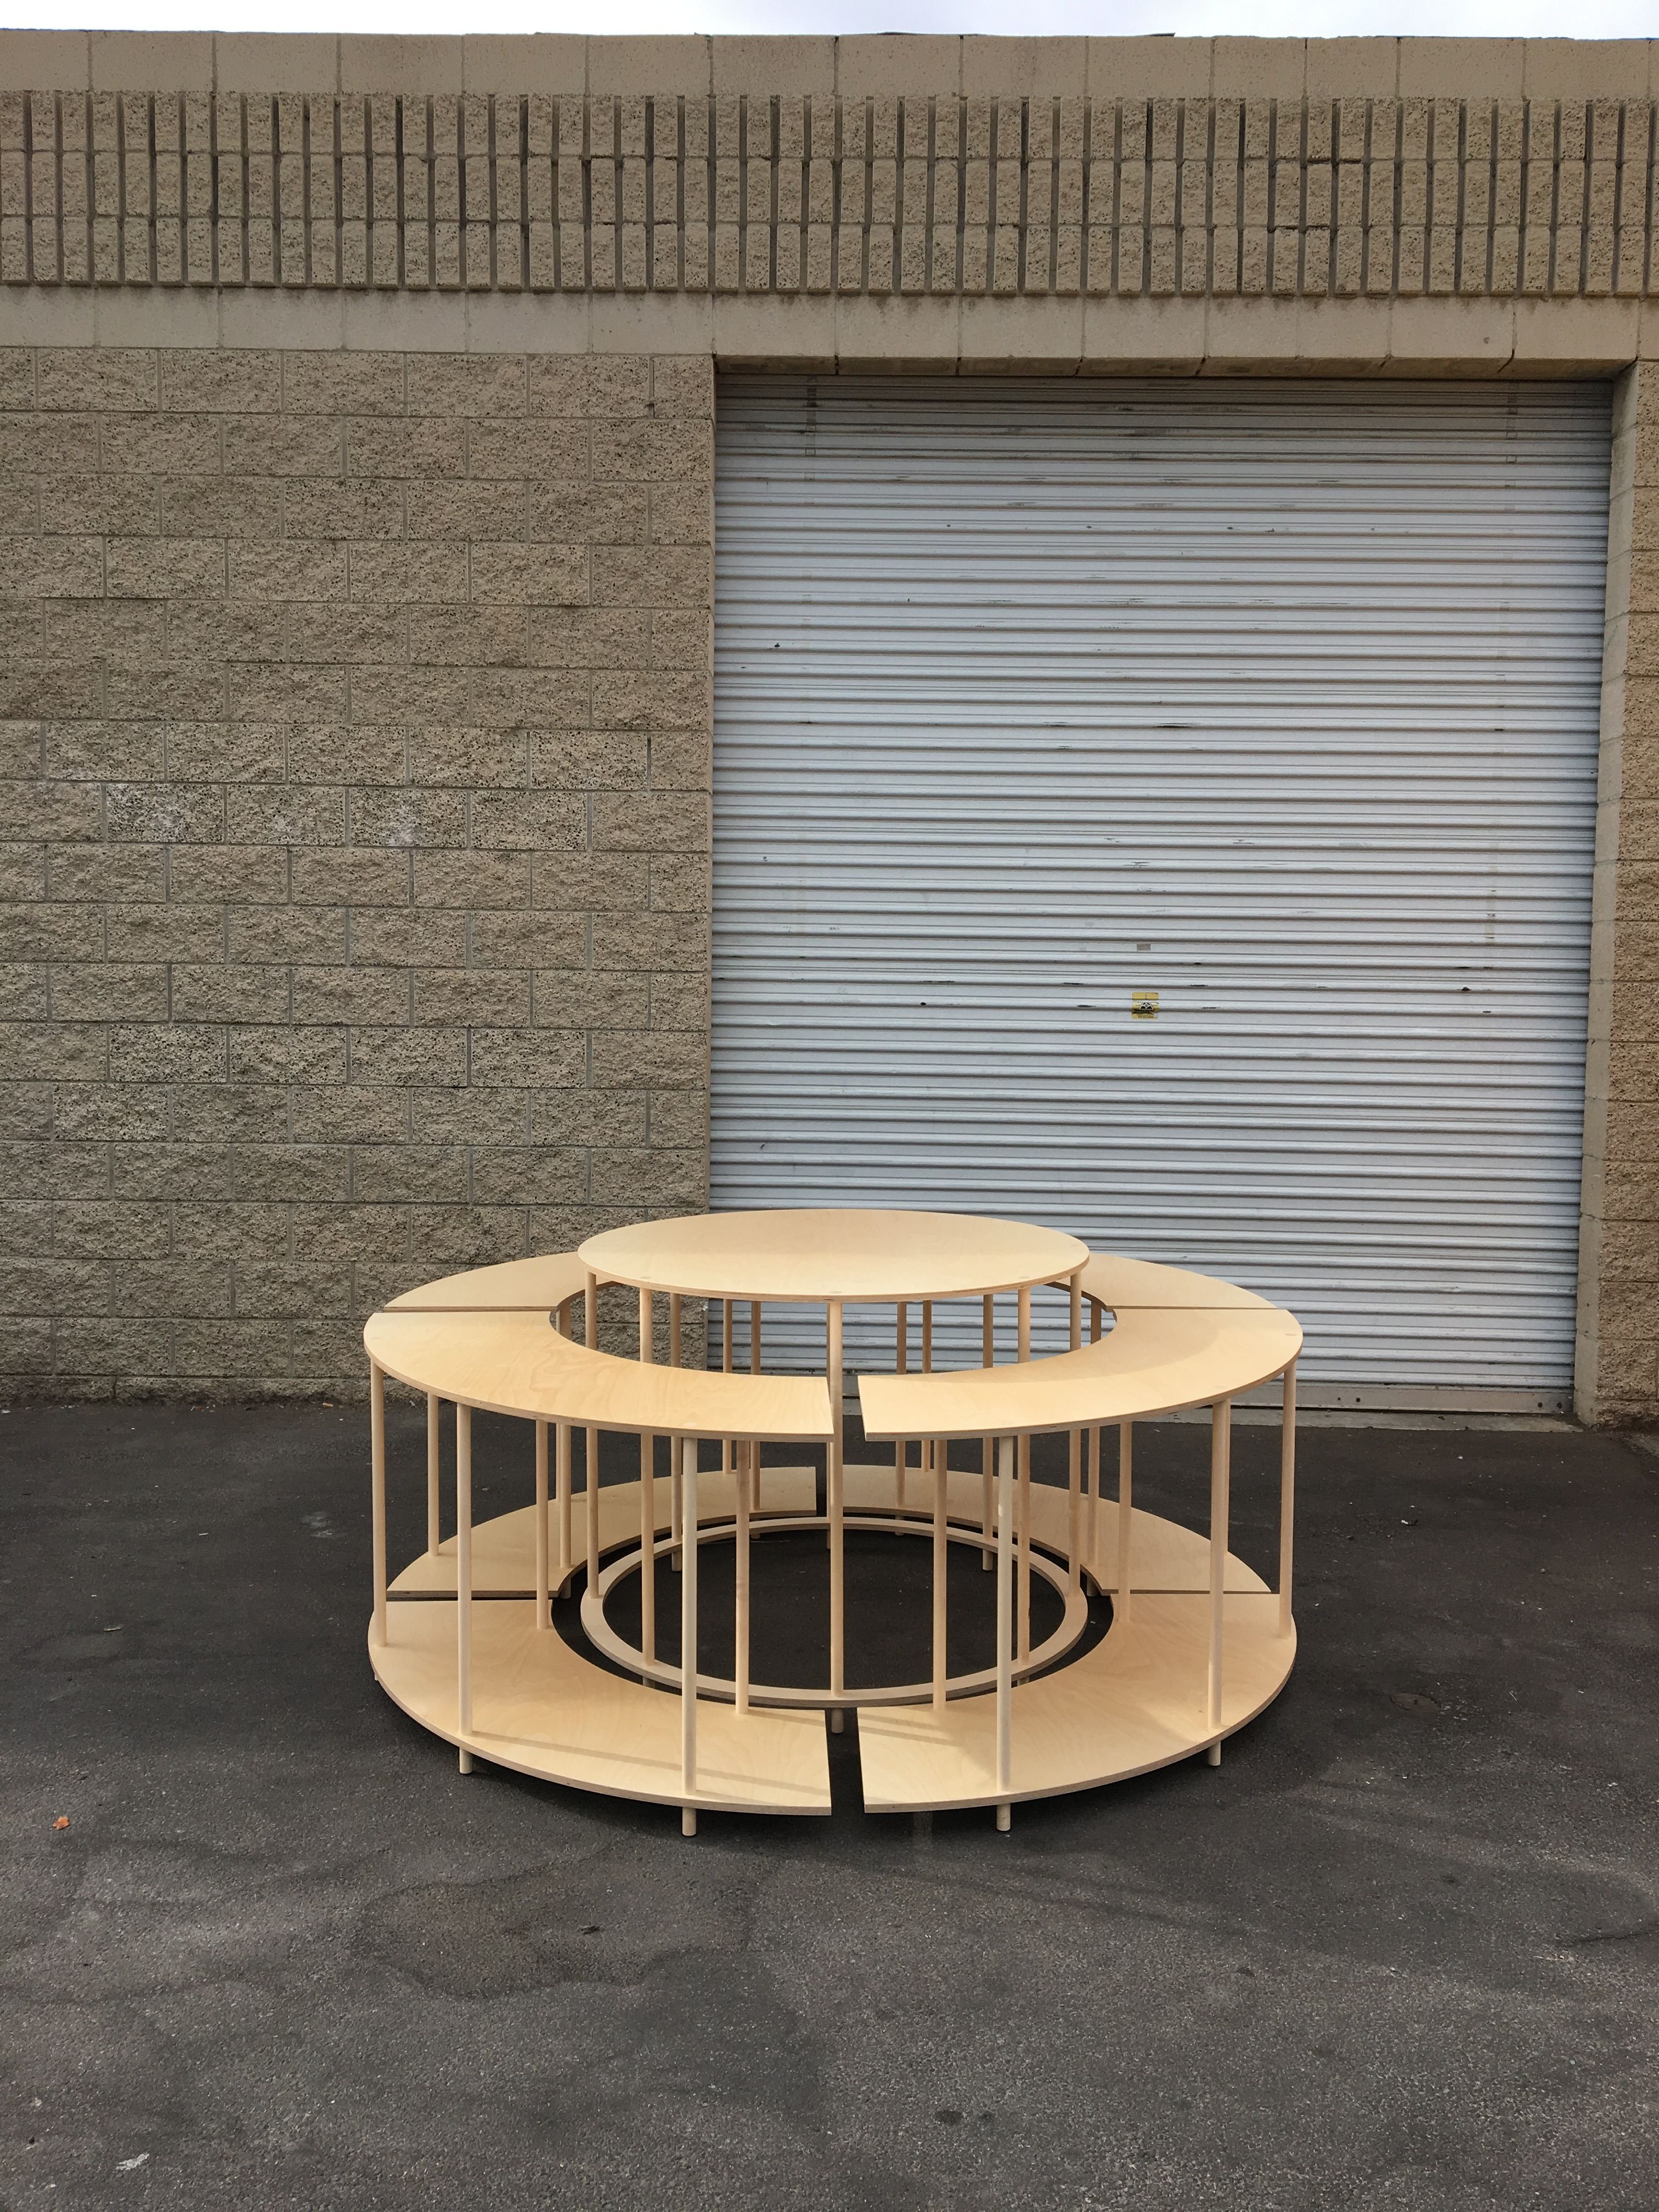  Display Table - Owl Bureau x Adidas / Abbott Kinney Festival product image 0